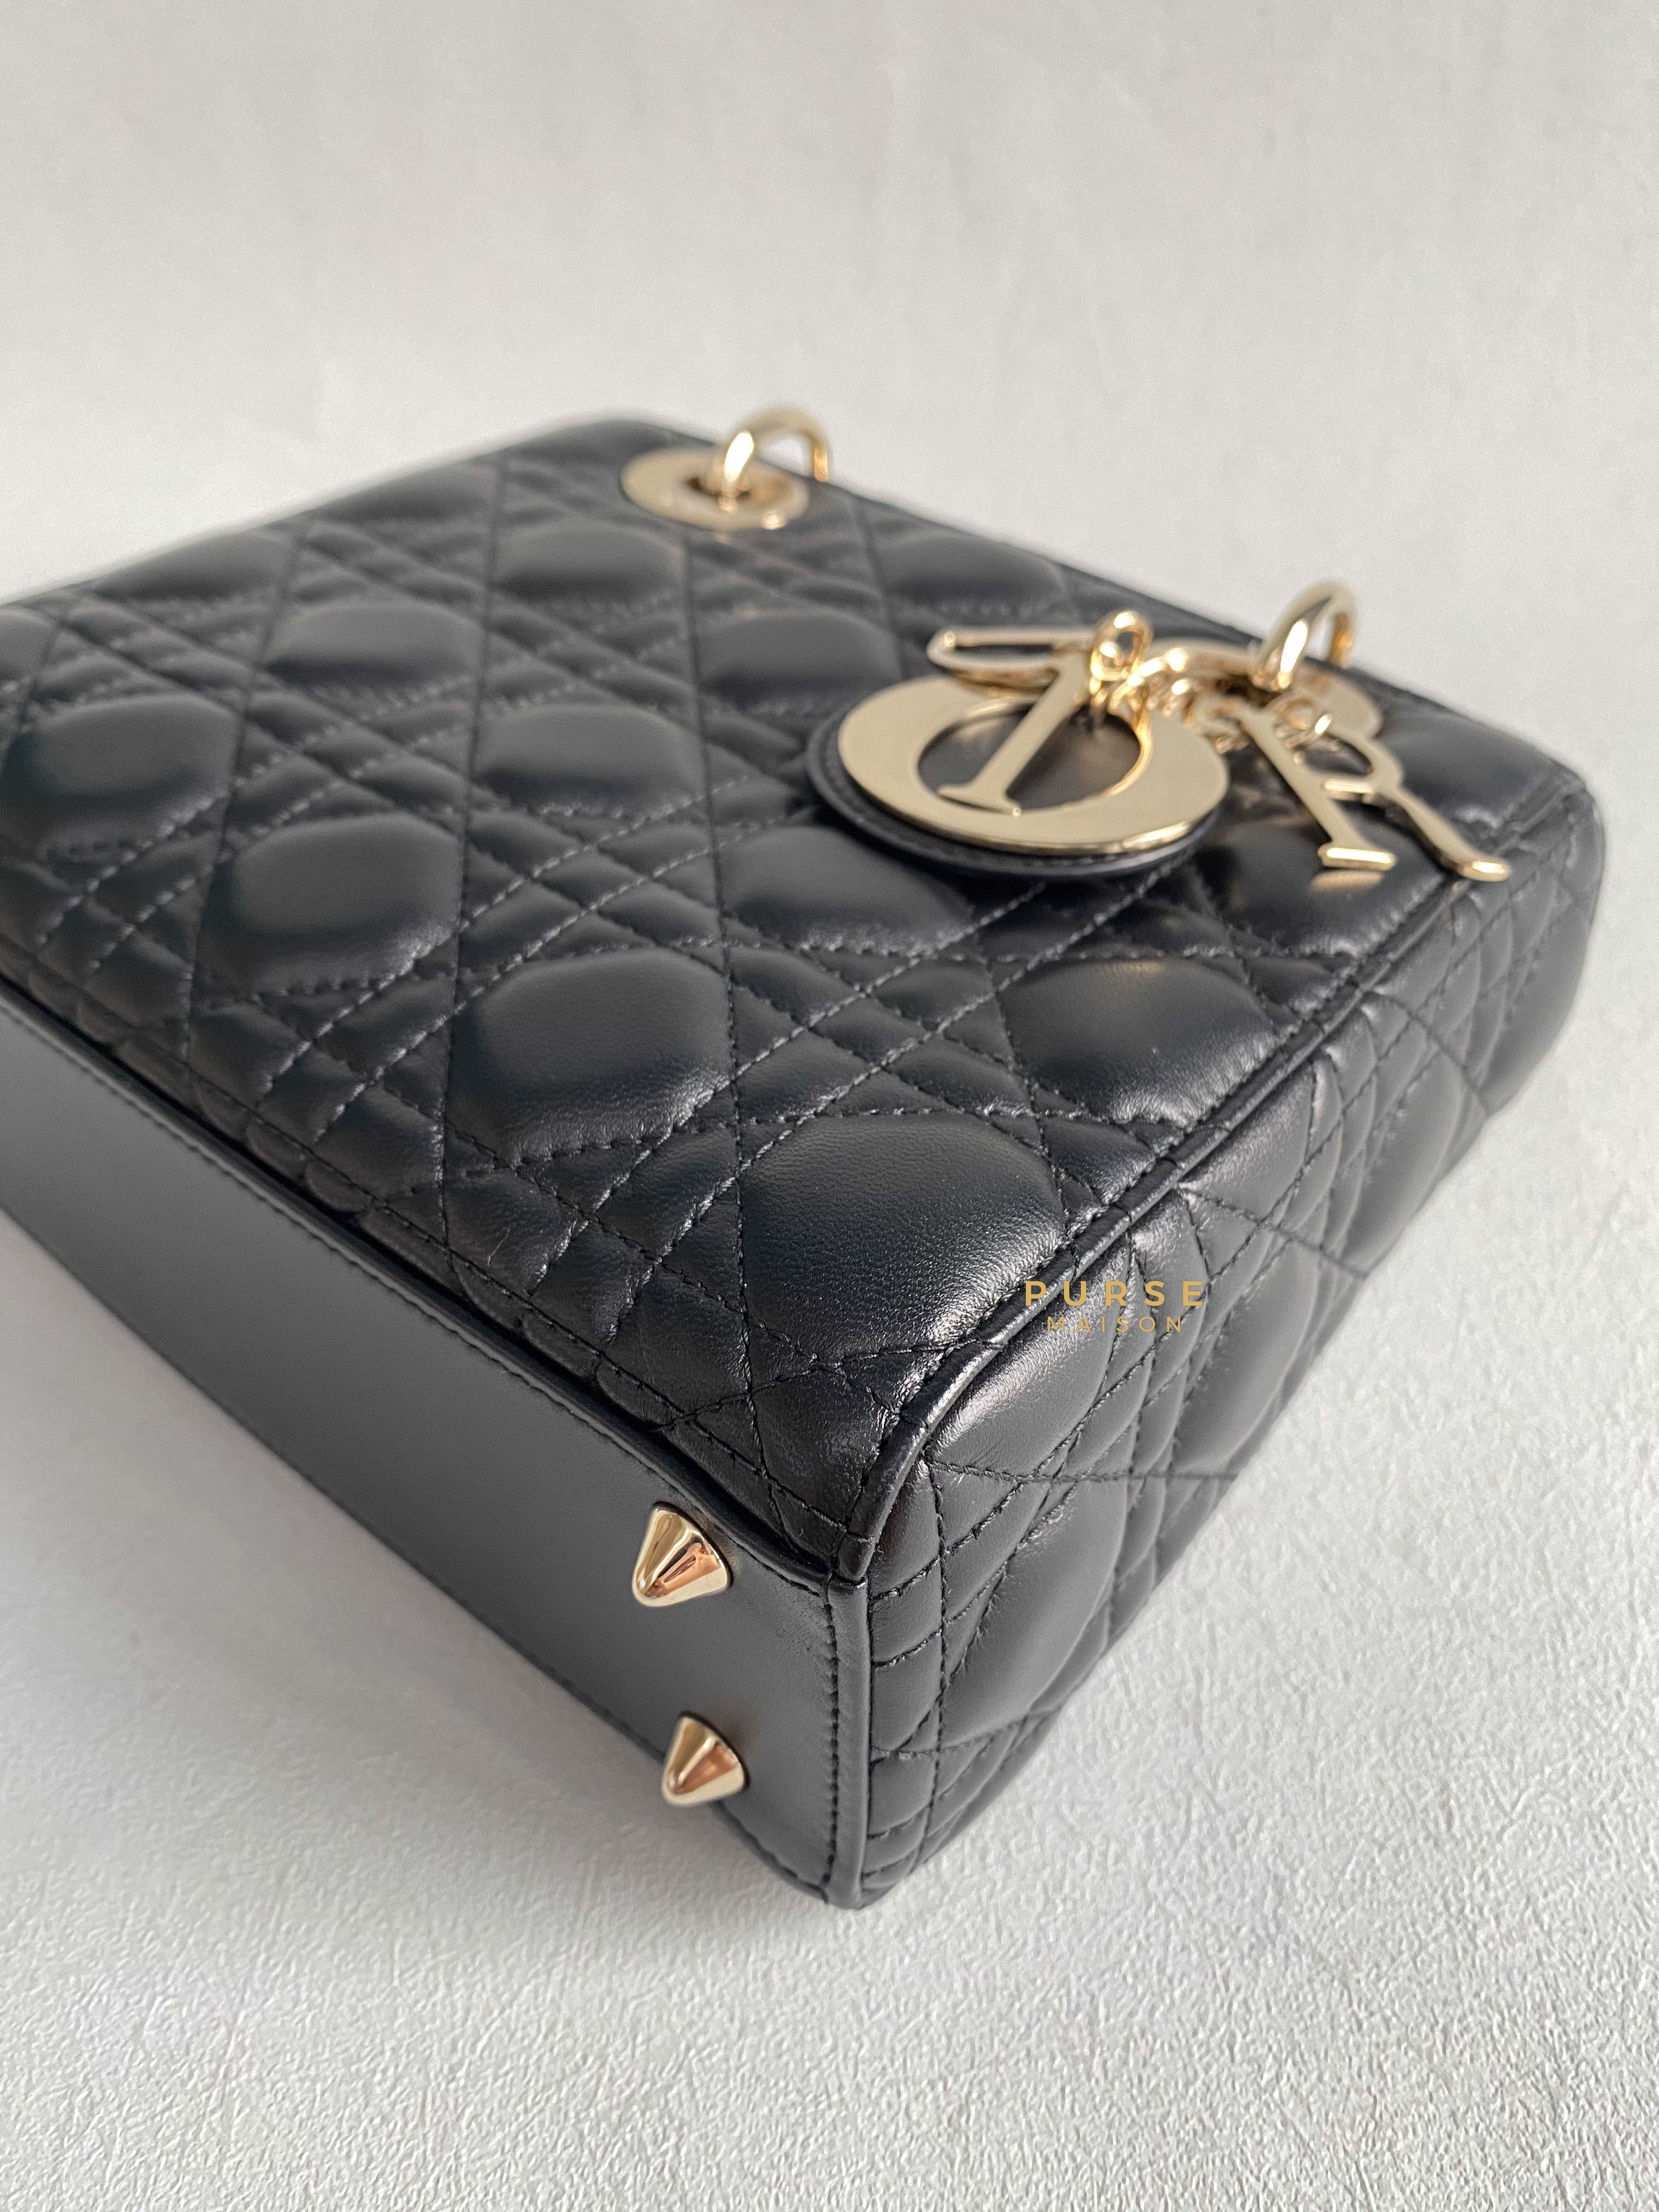 Christian Dior Small Lady Dior My ABCDior Black Cannage Lambskin (Year 2021) | Purse Maison Luxury Bags Shop